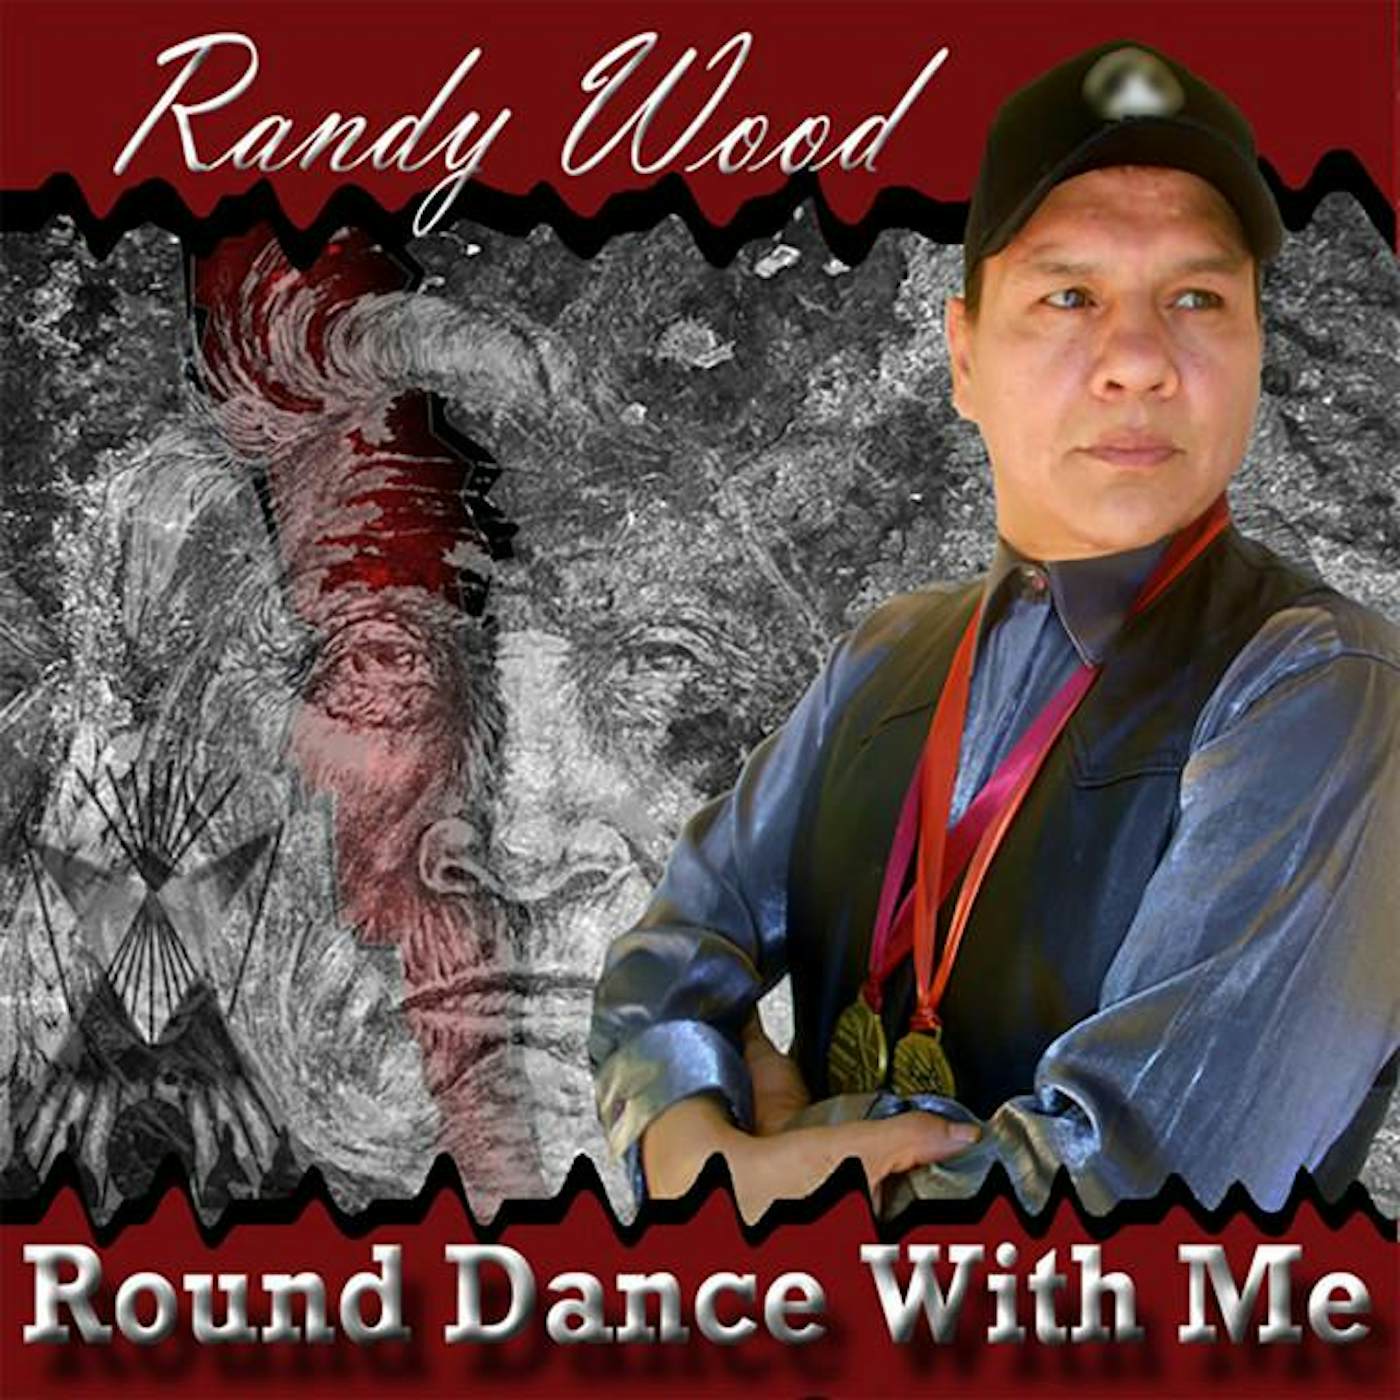 Randy Wood